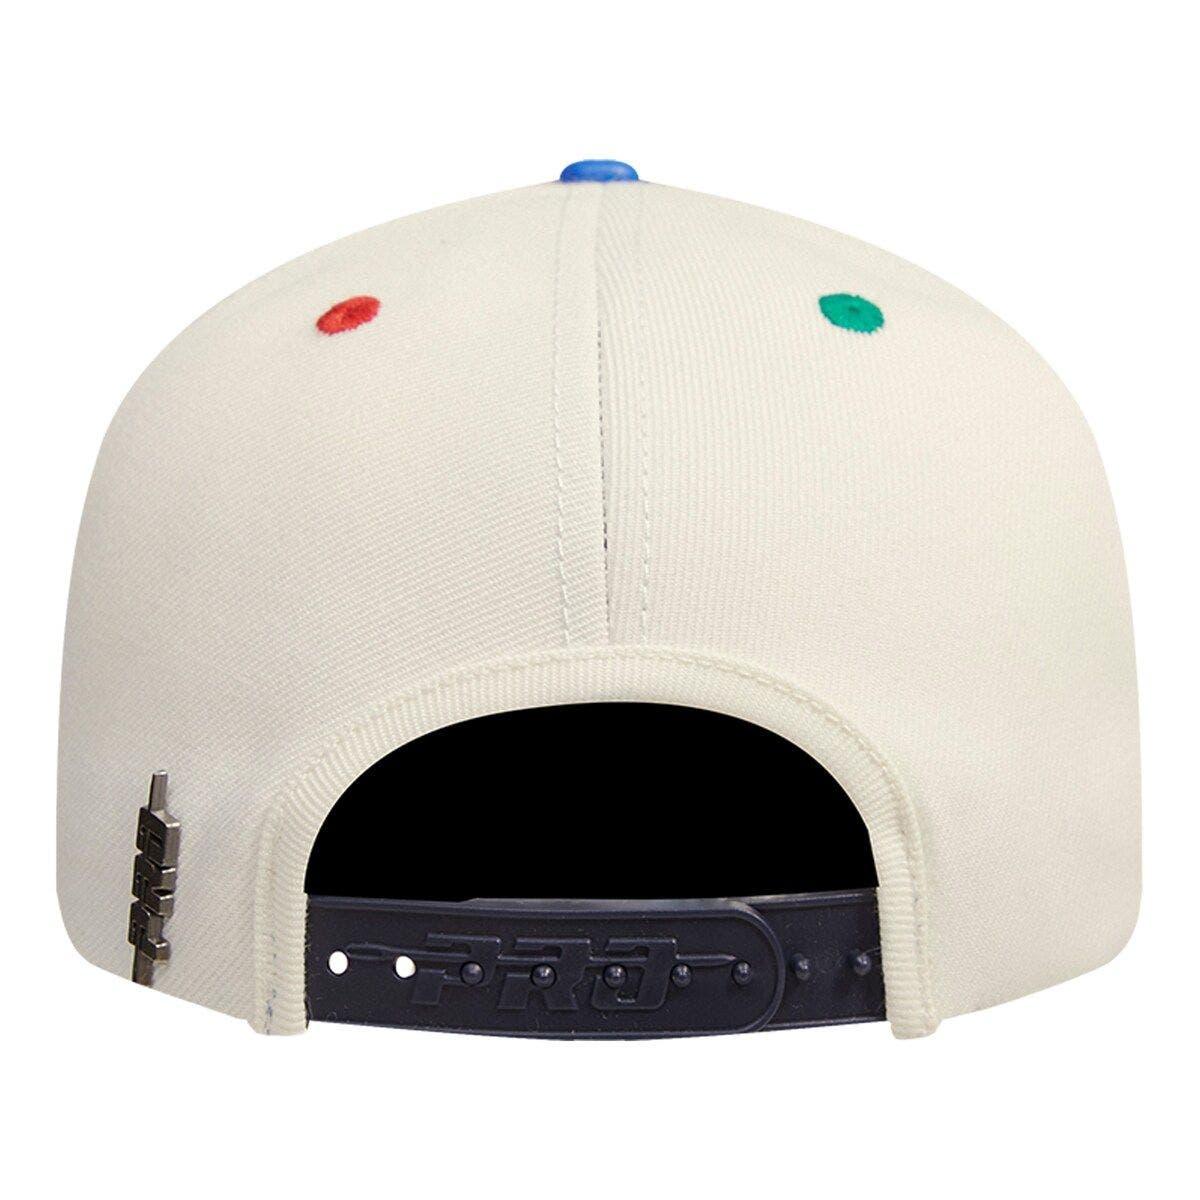 MLB Pro Standard Pro League Wool Snapback Hat - White